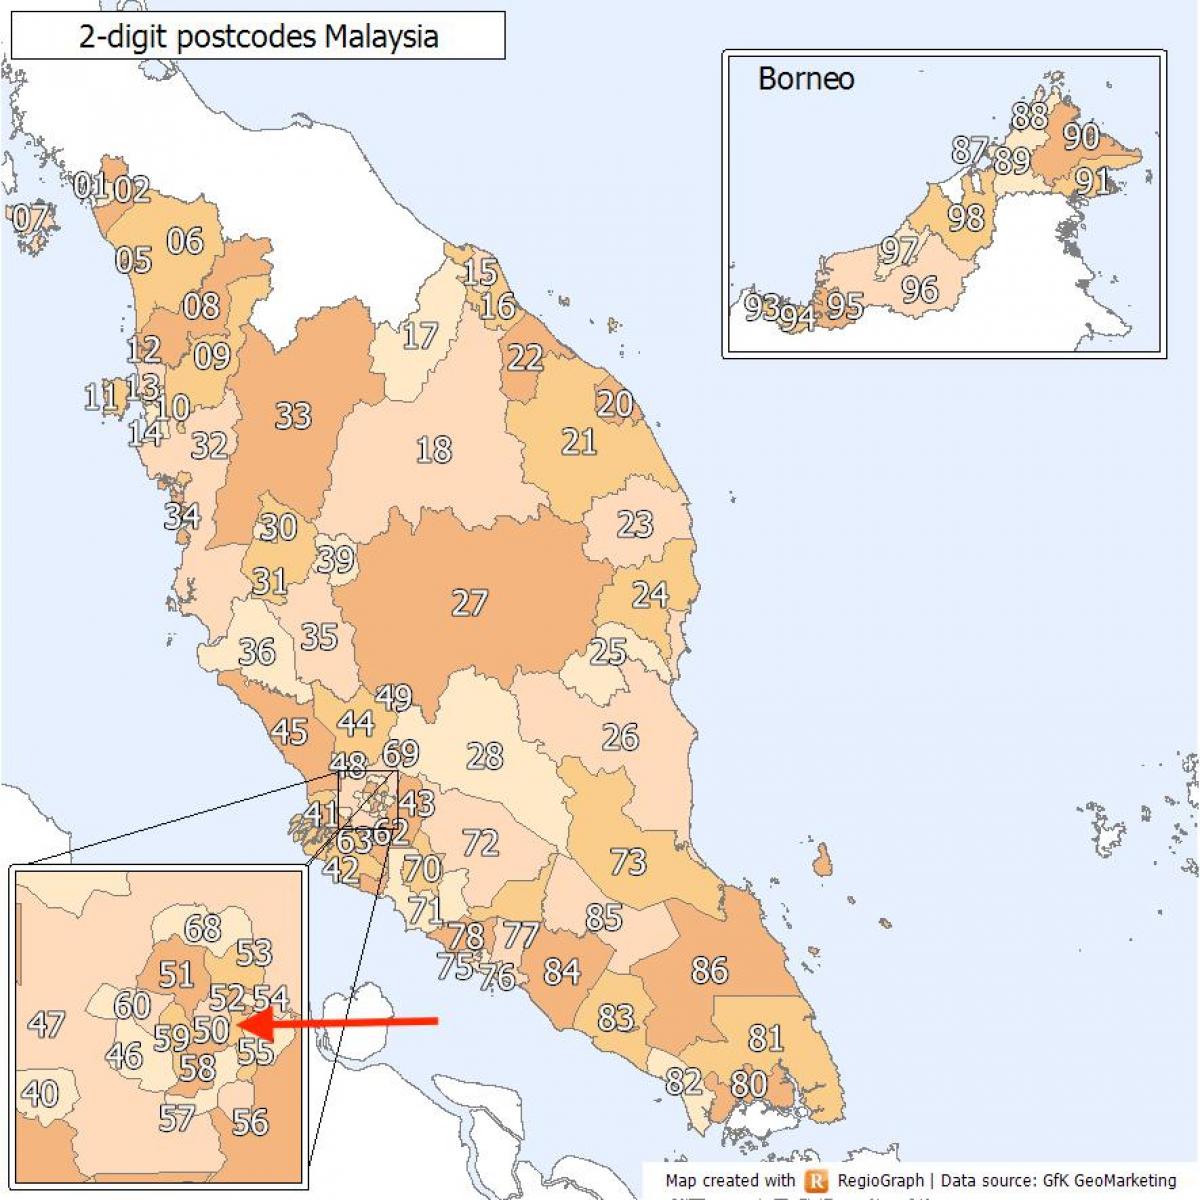 Mappa dei codici postali di Kuala Lumpur (KL)